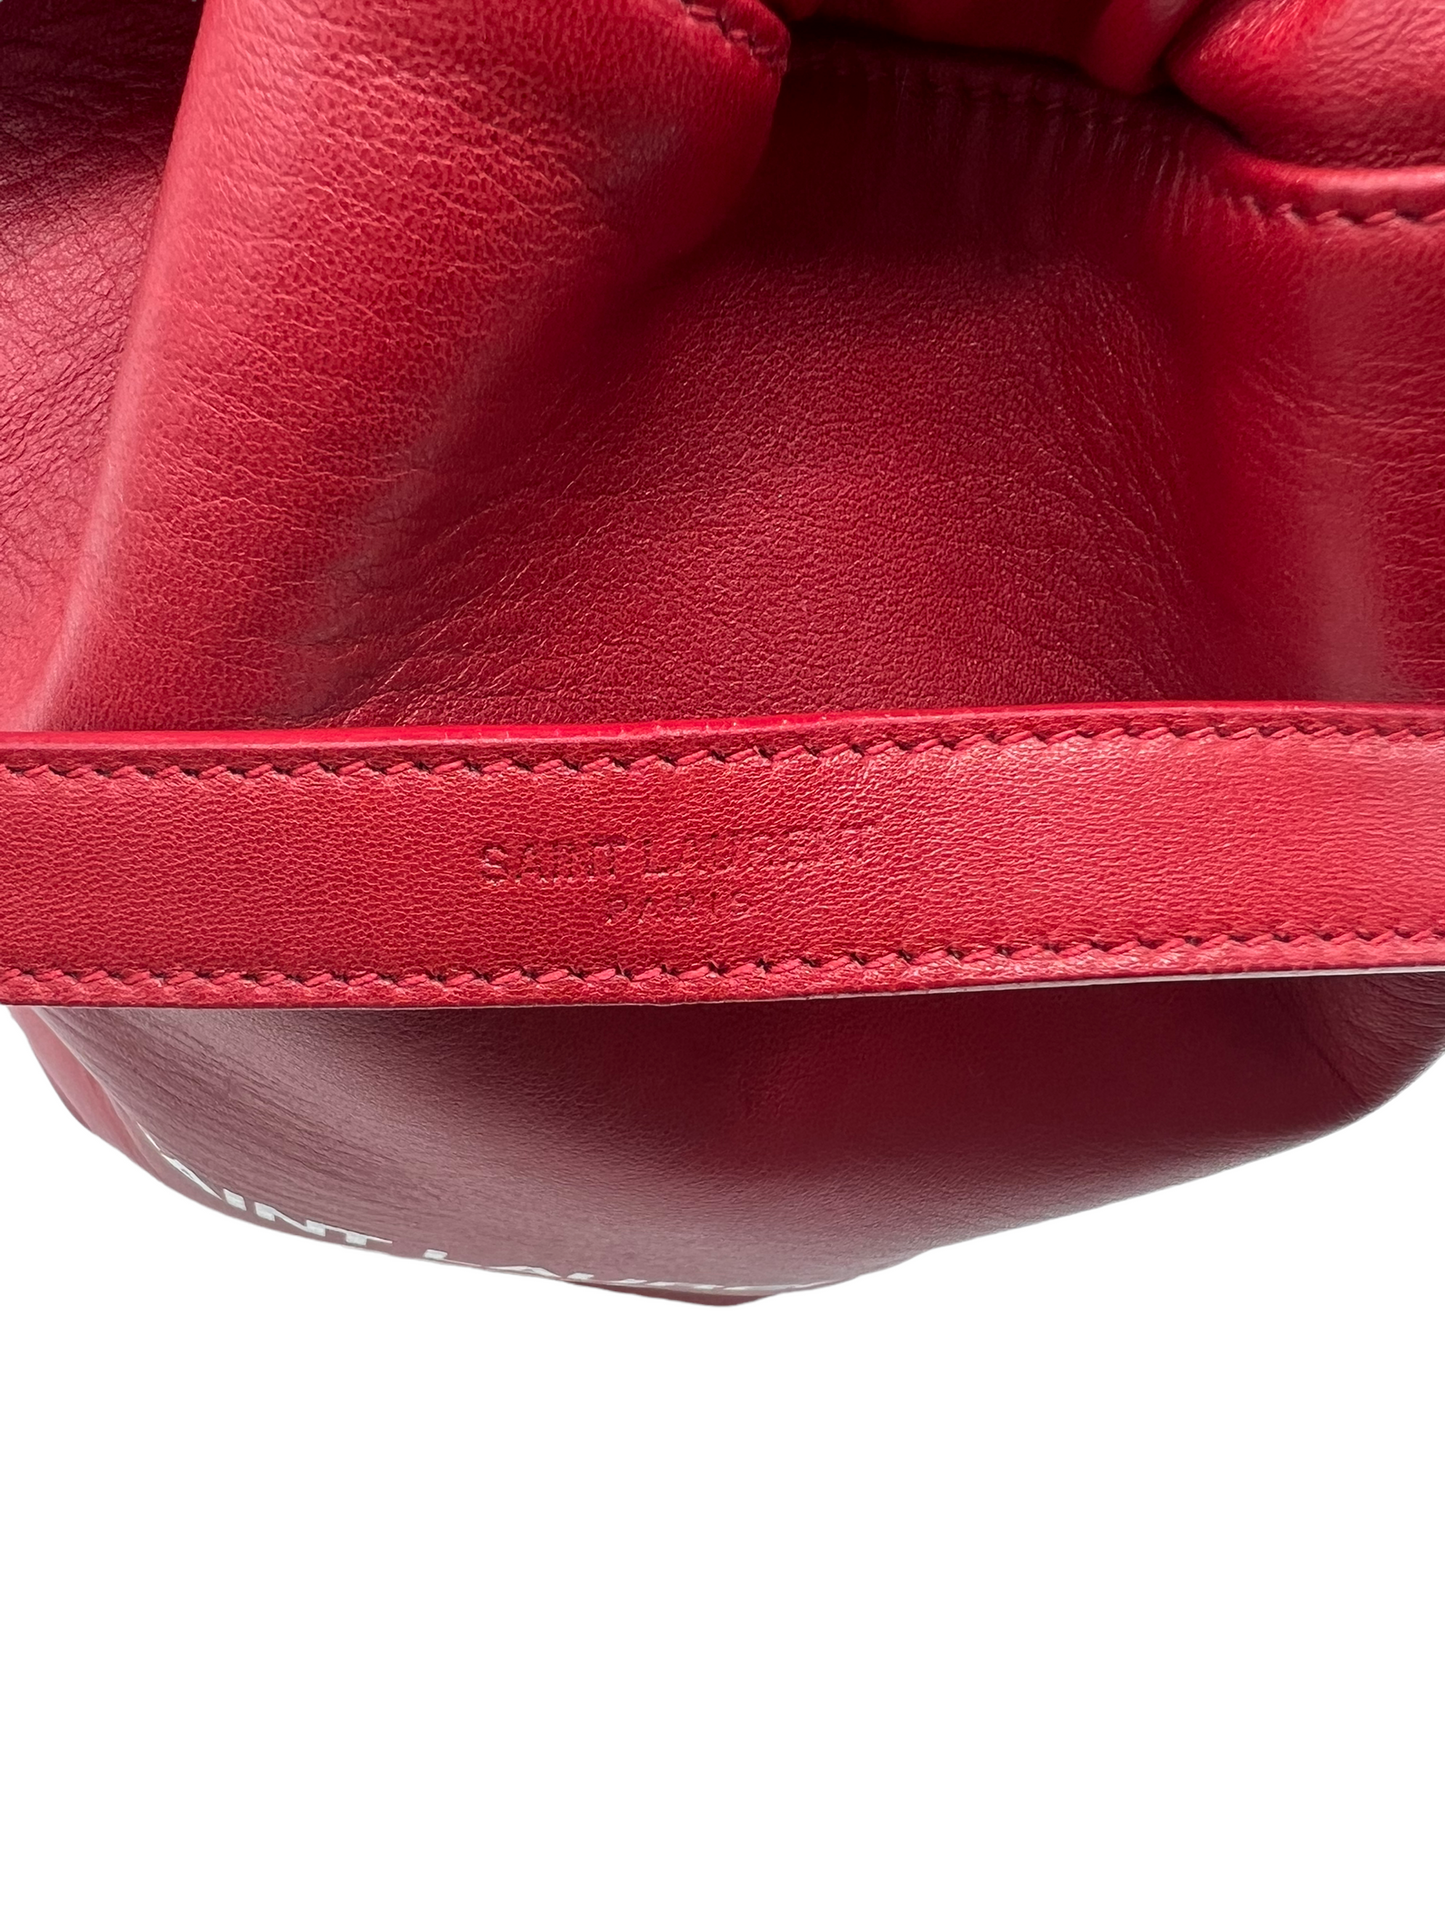 Saint Laurent YSL Red Leather Large Teddy Drawstring Bucket Bag